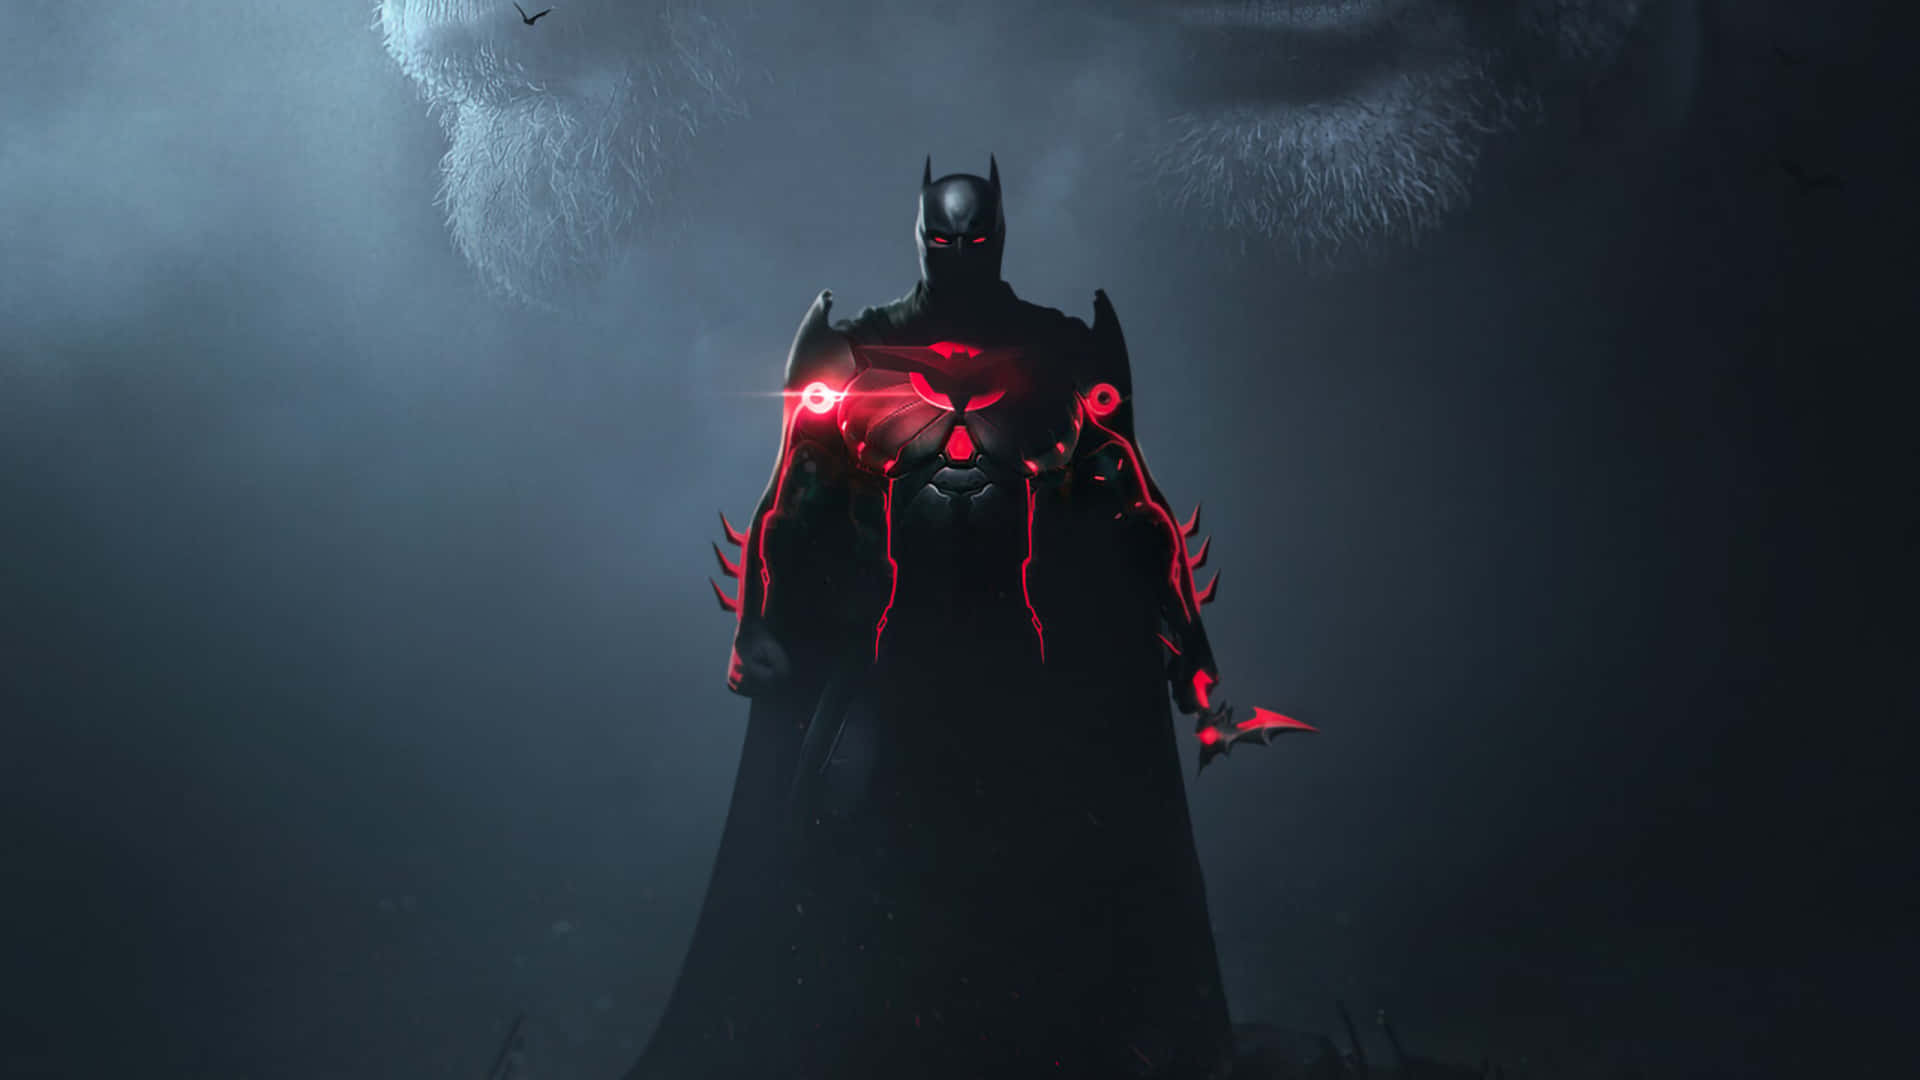 The Dark Knight Rises - Batman in Action Wallpaper